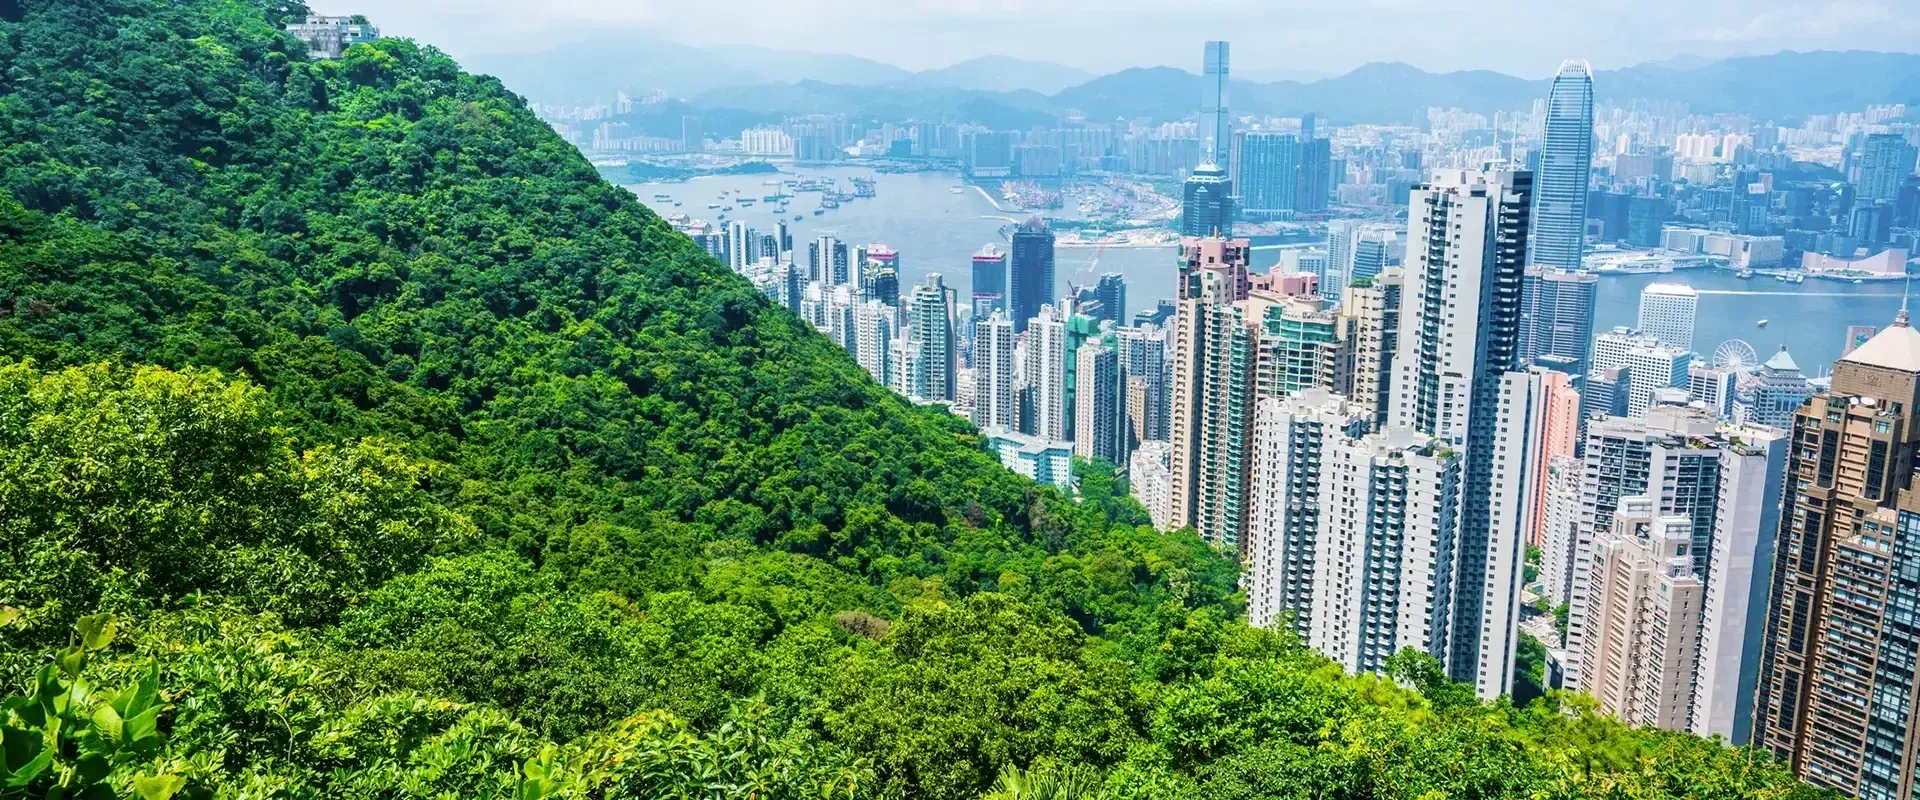 ESG A GROWING FOCUS FOR HONG KONG COMPANIES